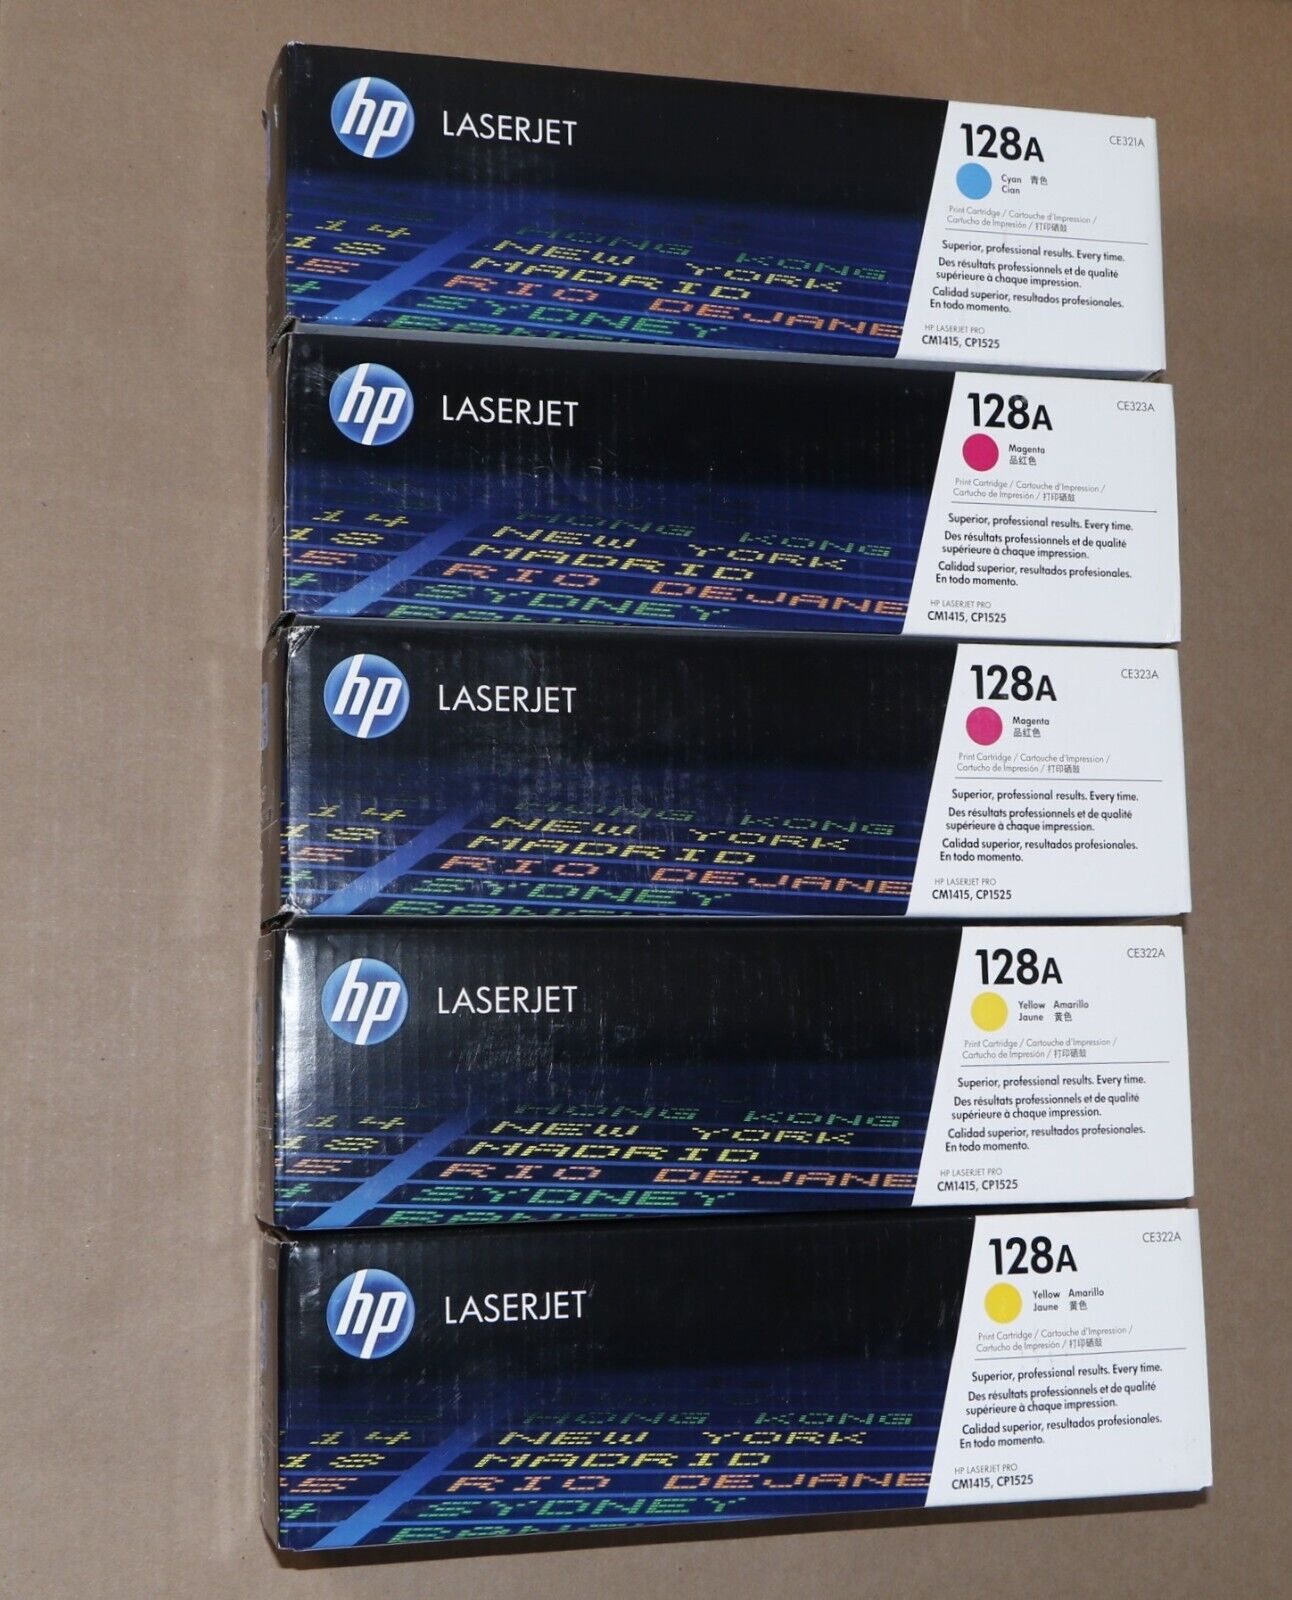 5 OEM HP 128A LaserJet CM1415, CP1525 CMMYY Print Cartridges CE321A,322A,323A